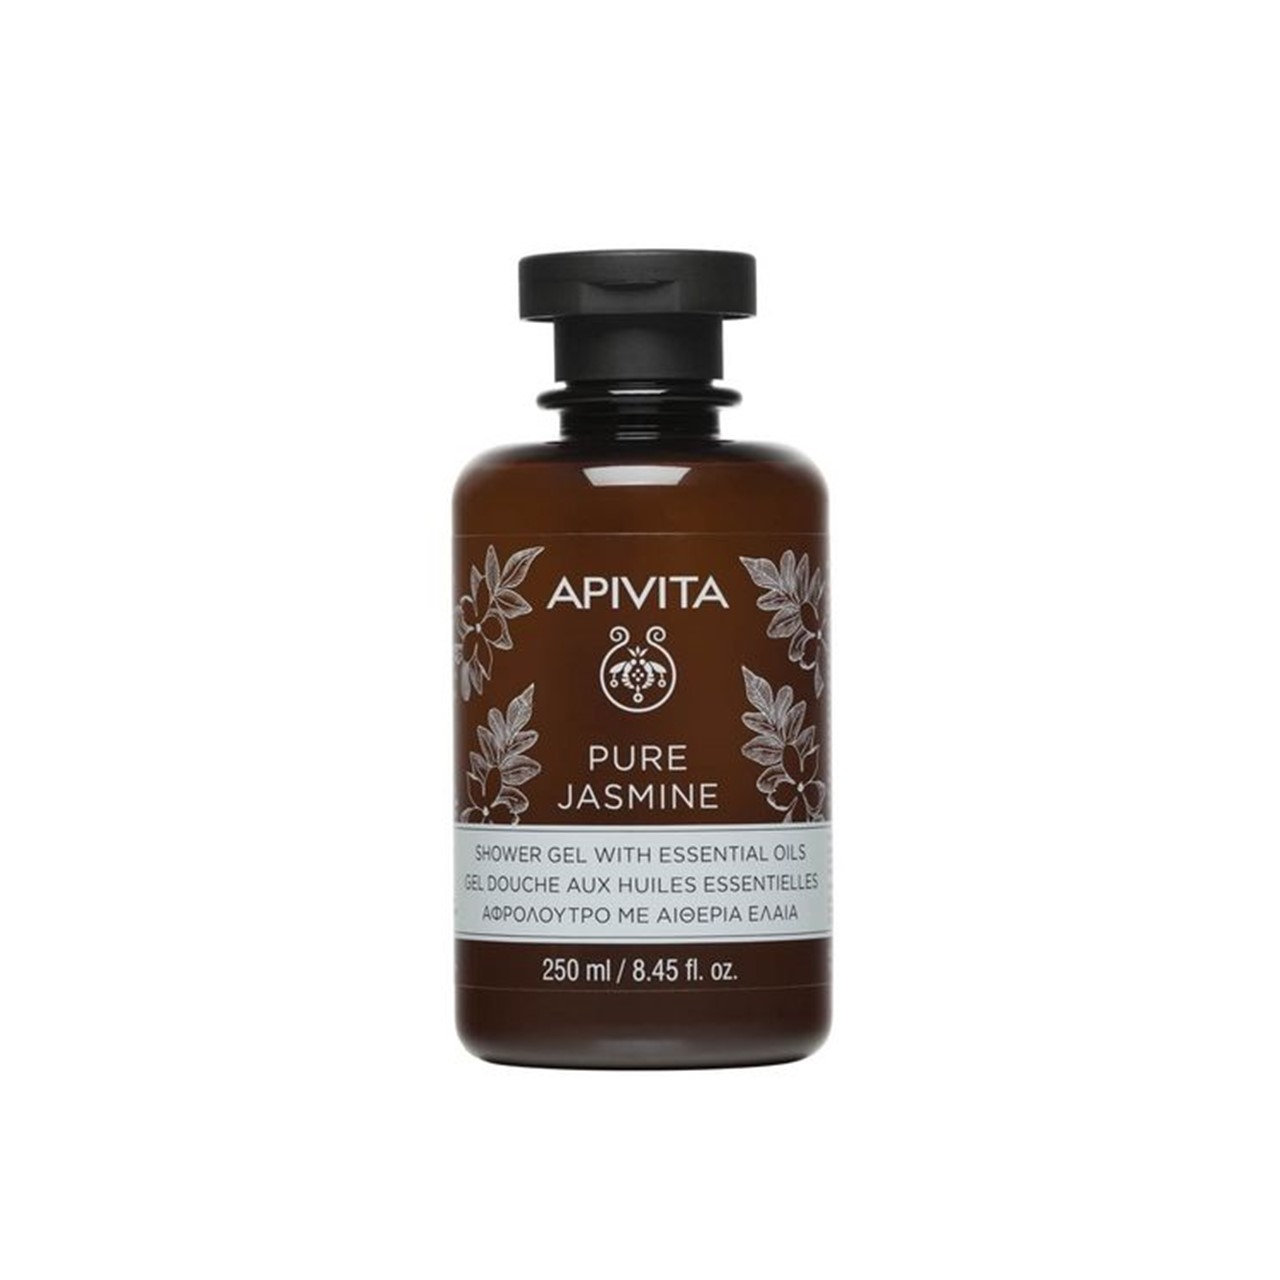 APIVITA Pure Jasmine Shower Gel Essential Oils 250ml (8.45fl oz)